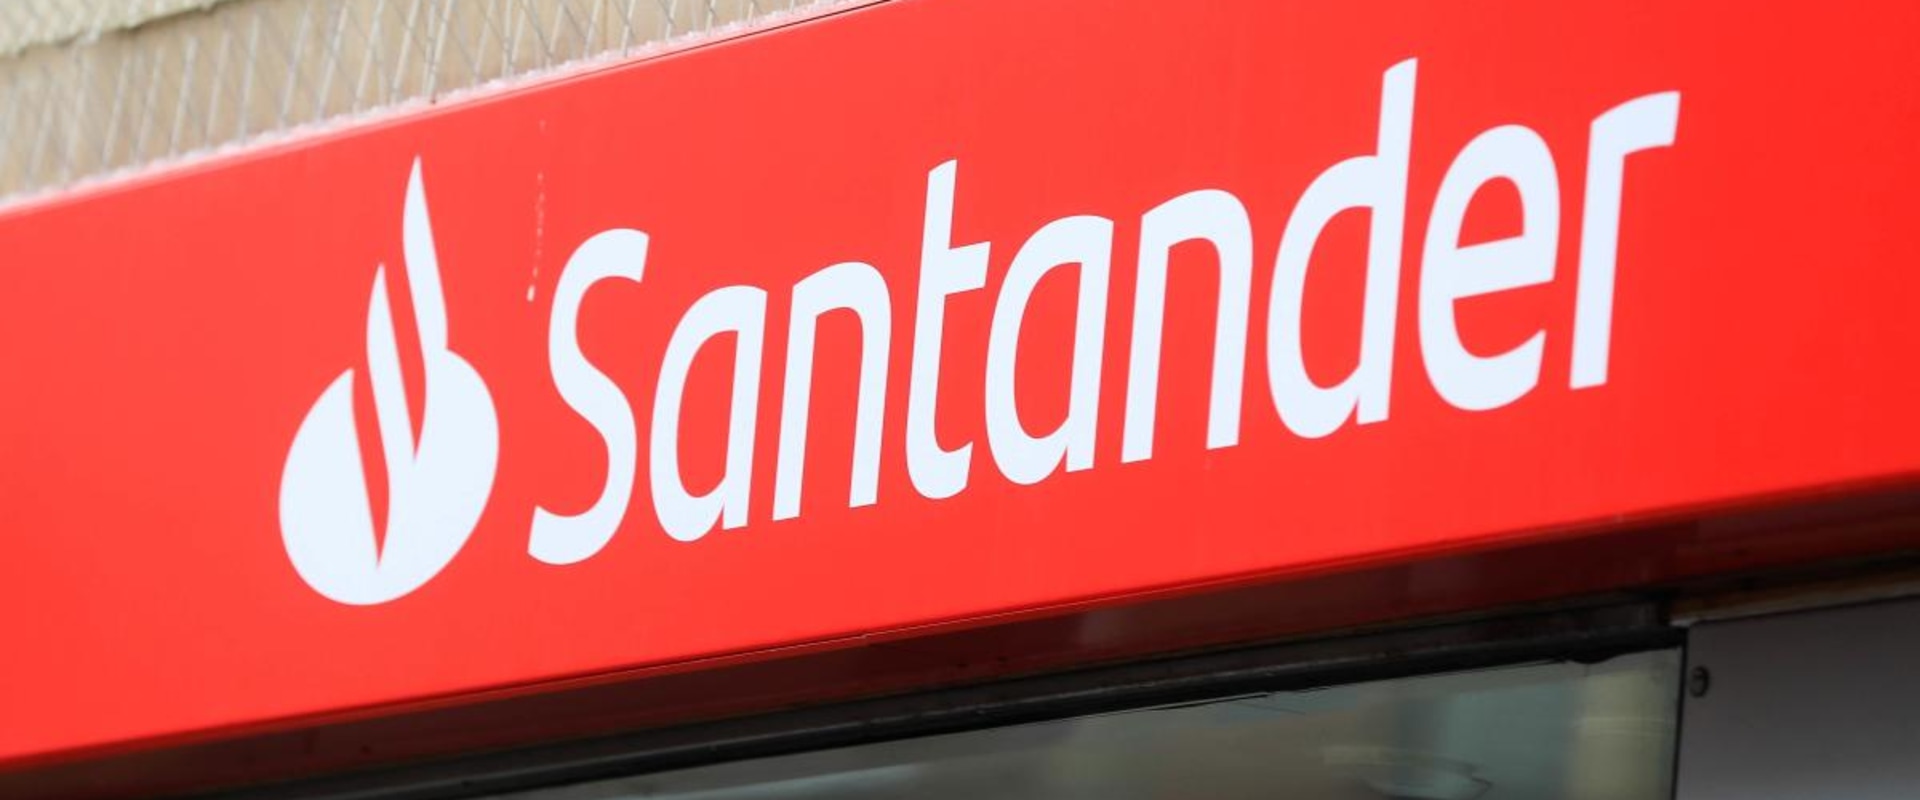 Flexible Repayment Options for Santander Mortgages